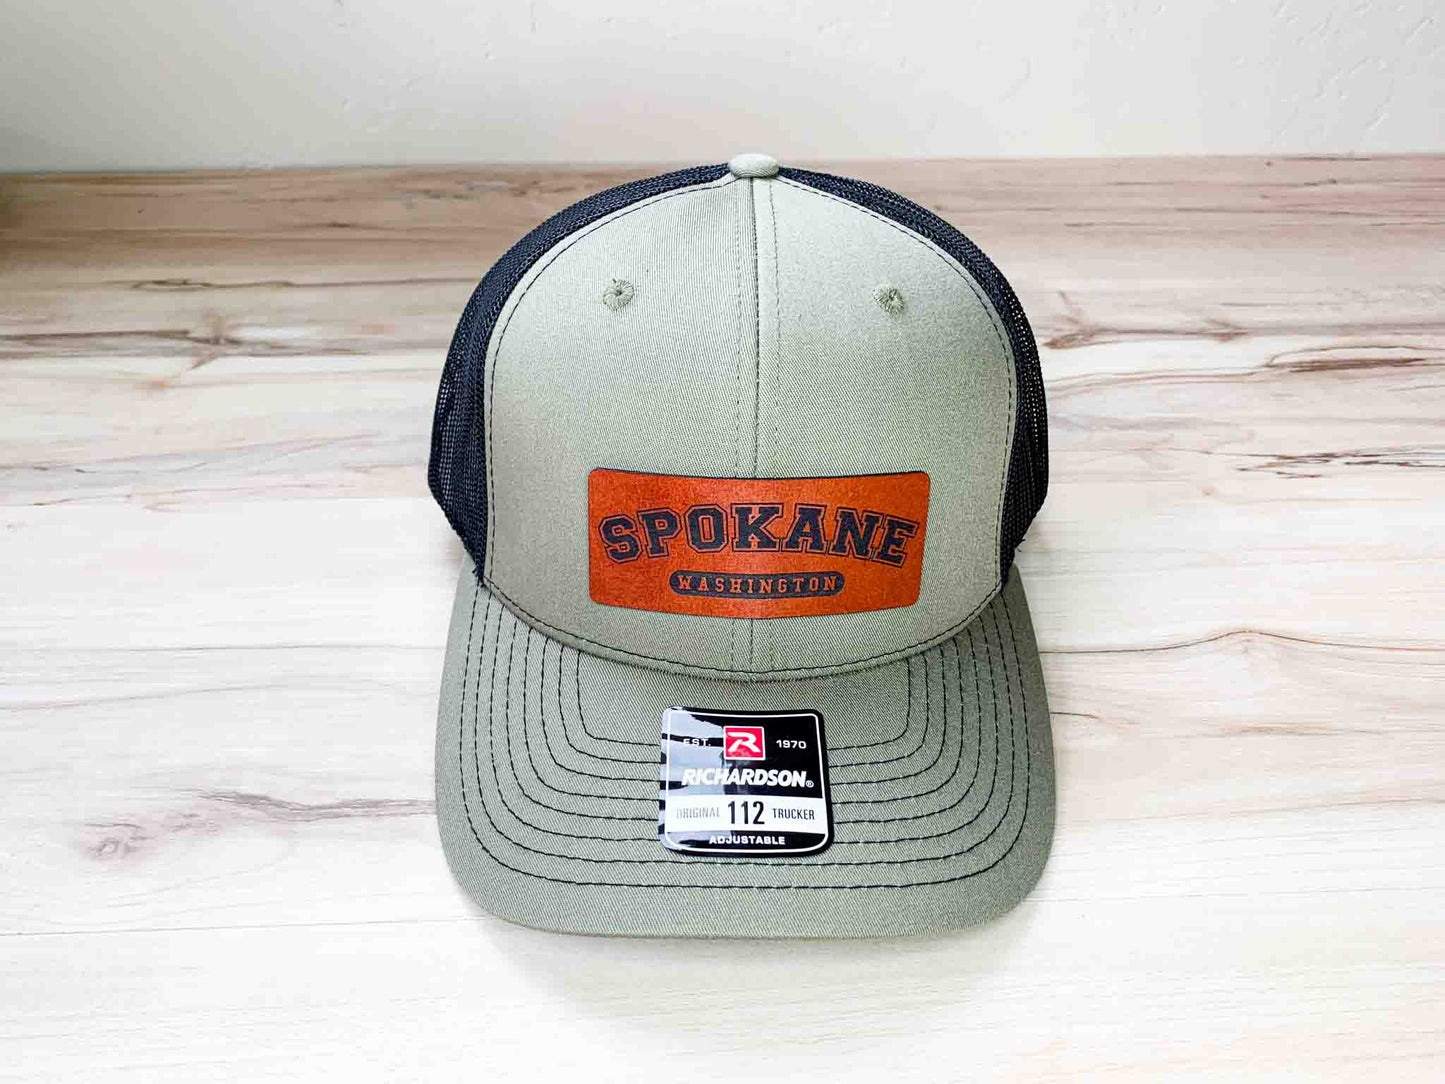 Spokane Washington Leather Patch Hat